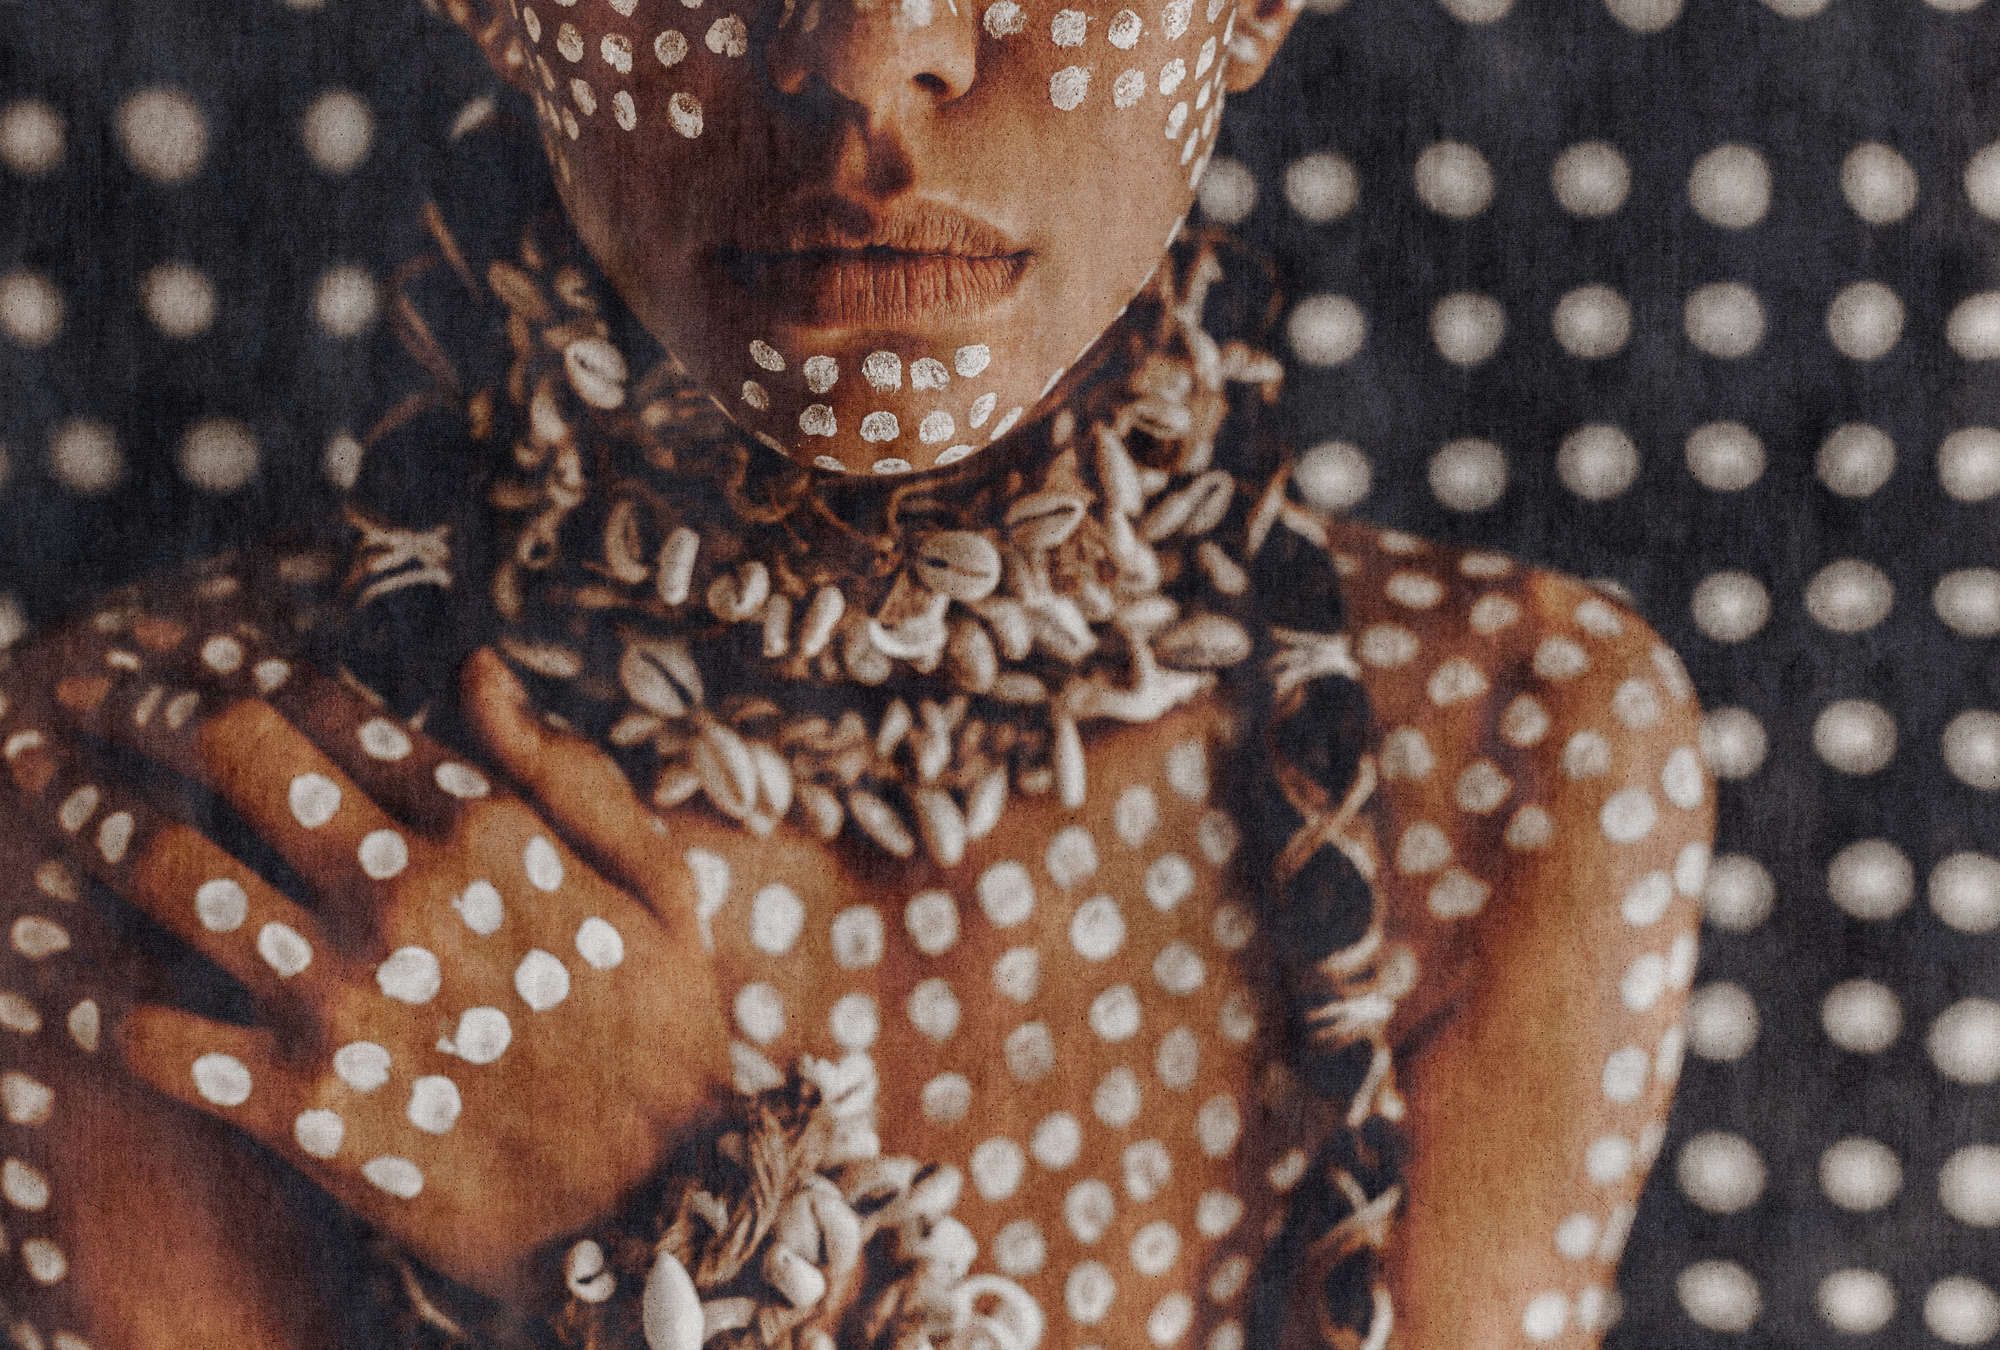             Fotomural »alani« - mujer africana con pintura corporal, estructura de tapiz en el fondo - tela no tejida mate, lisa
        